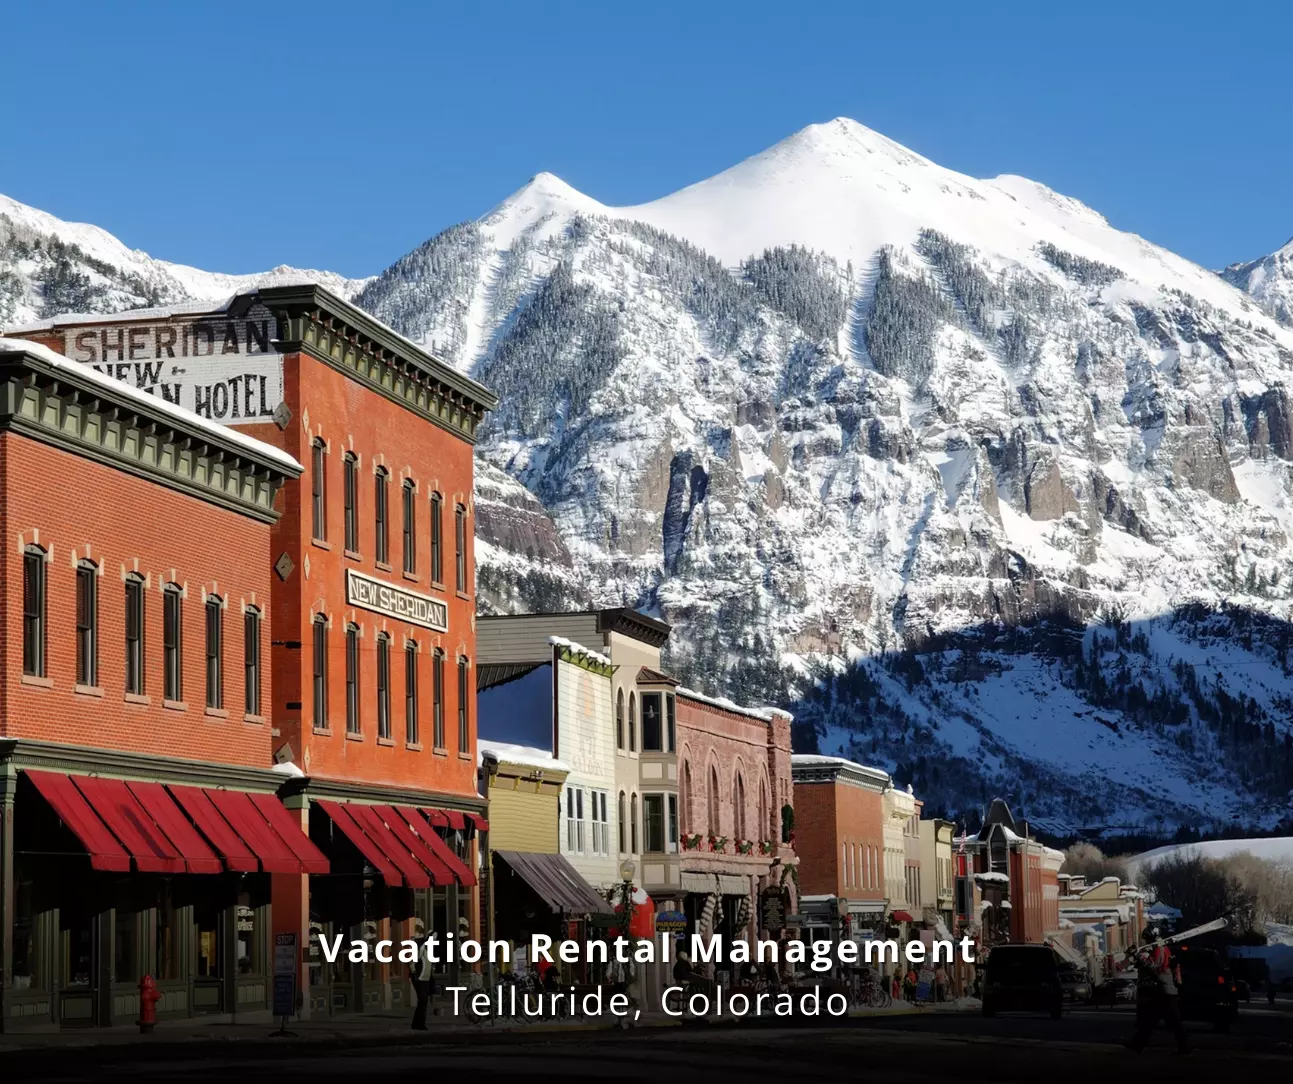 Vacation Rental Management Telluride Colorado